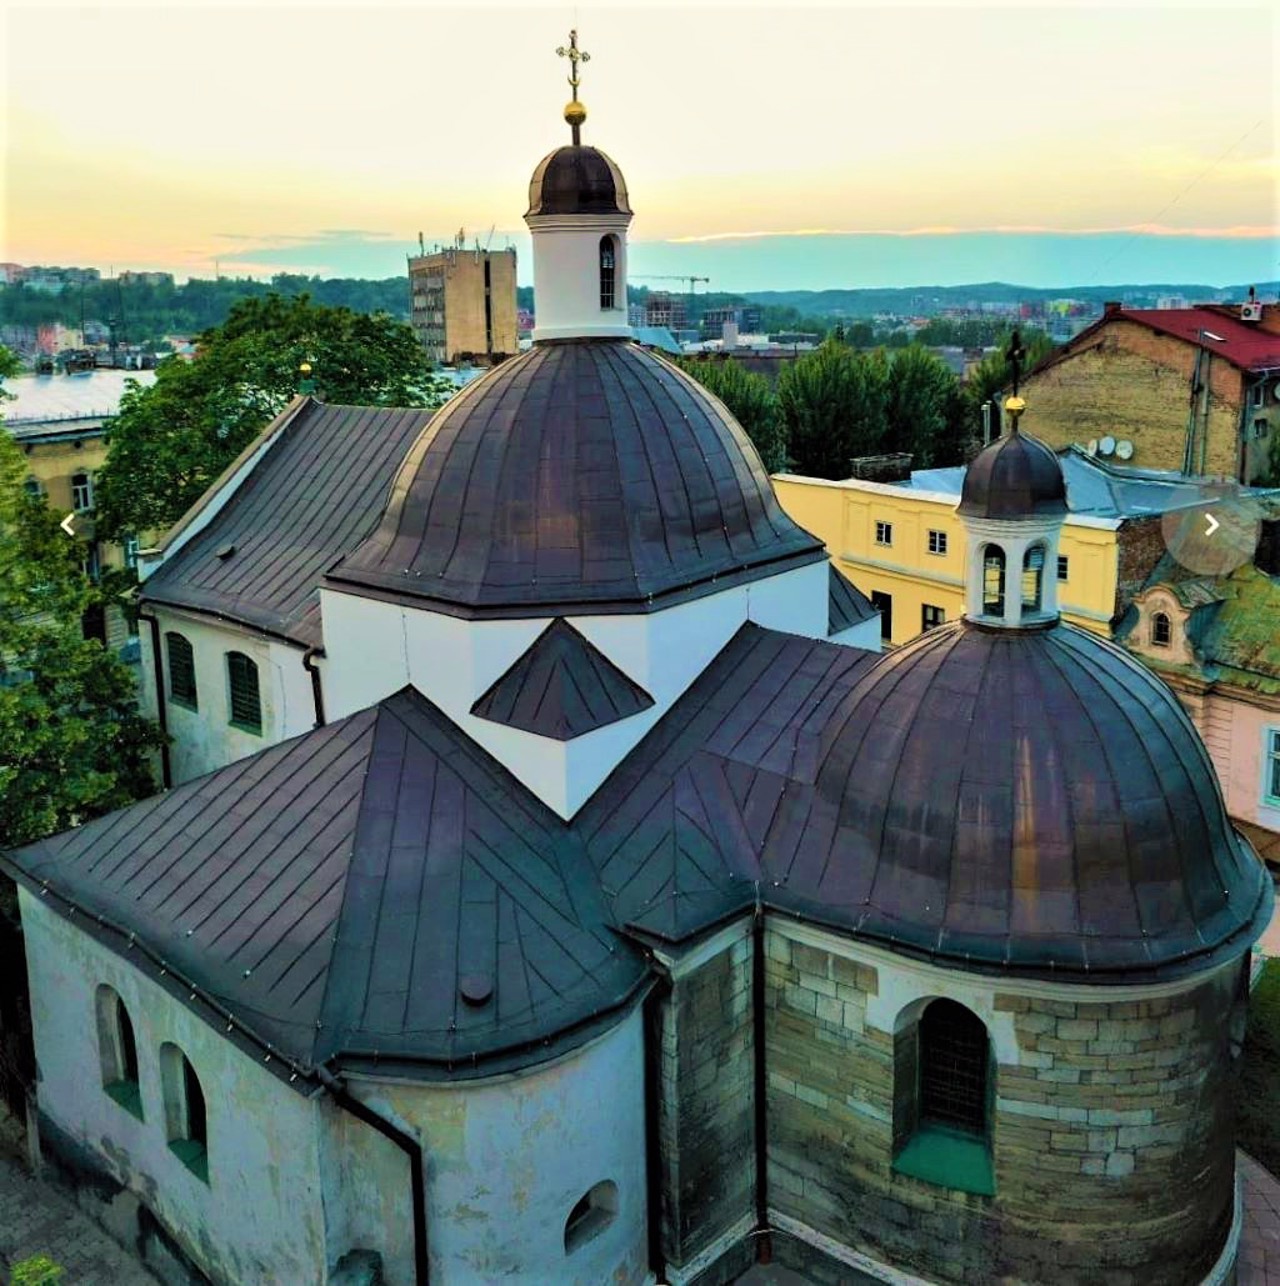 Princely Church of Saint Nicholas, Lviv